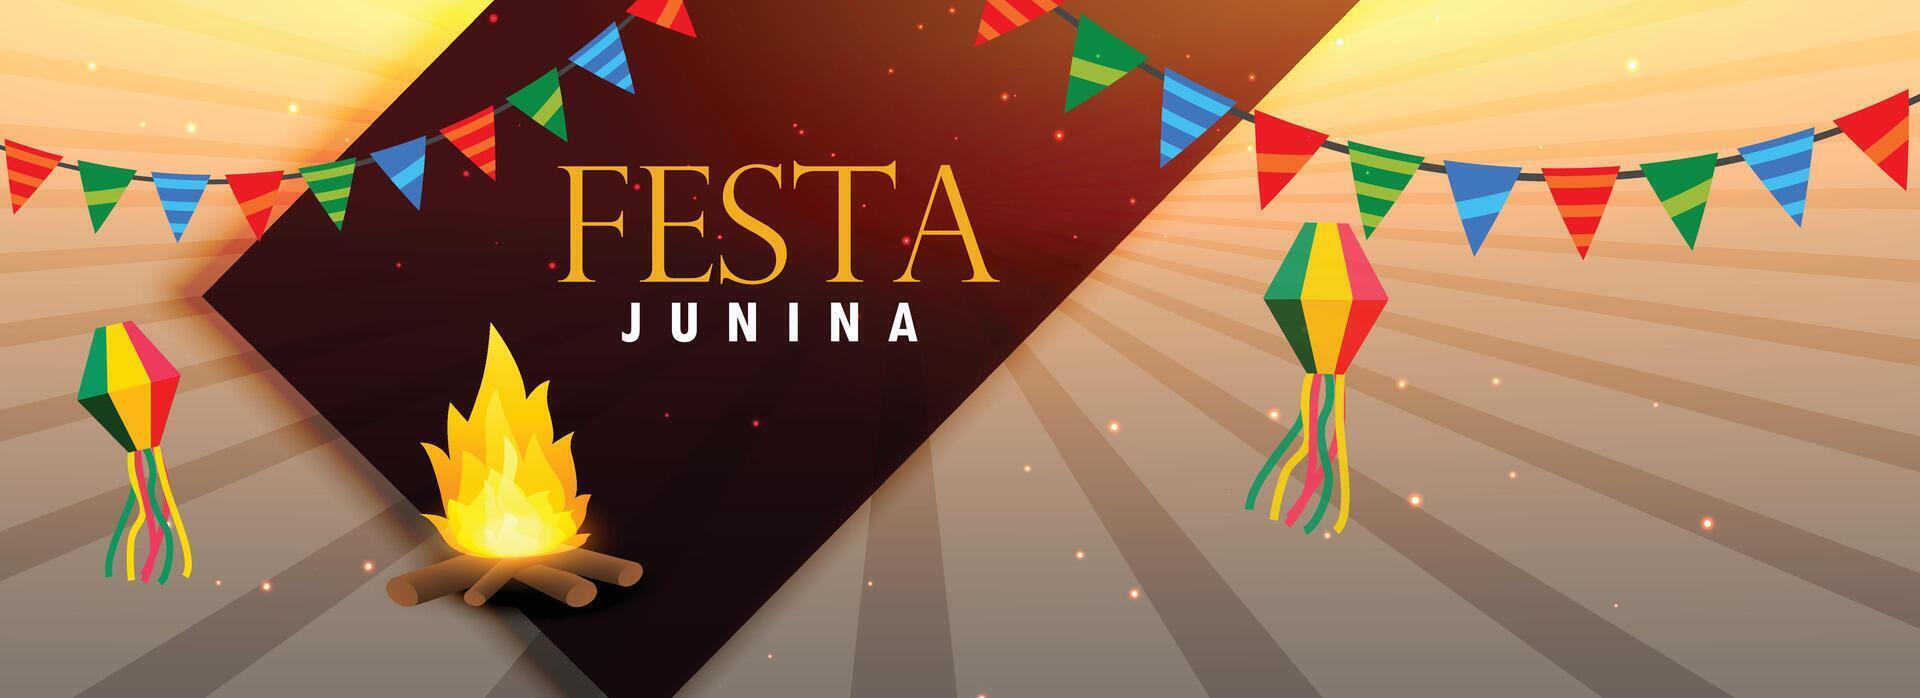 brasile festa junina Festival bandiera design vettore